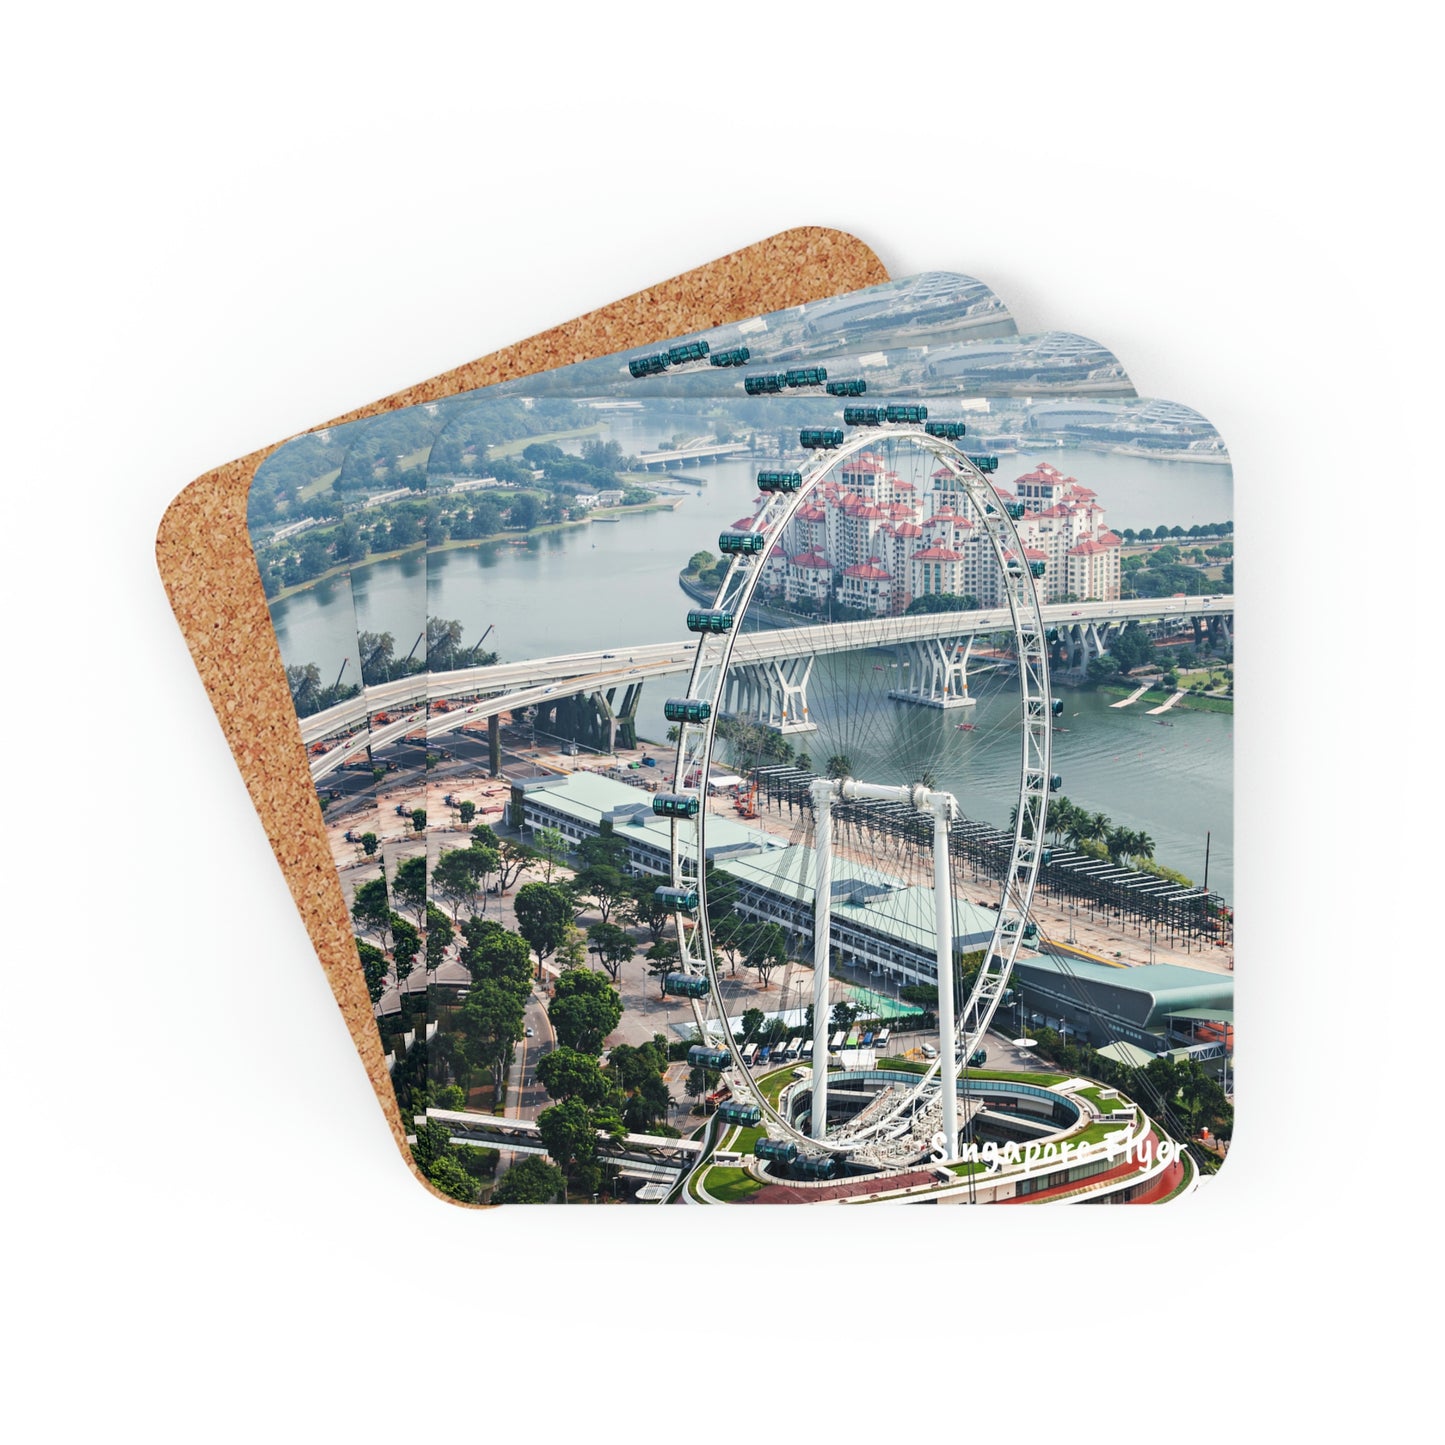 Corkwood Coaster Set (4) - SG Series (Singapore Flyer - Day View)